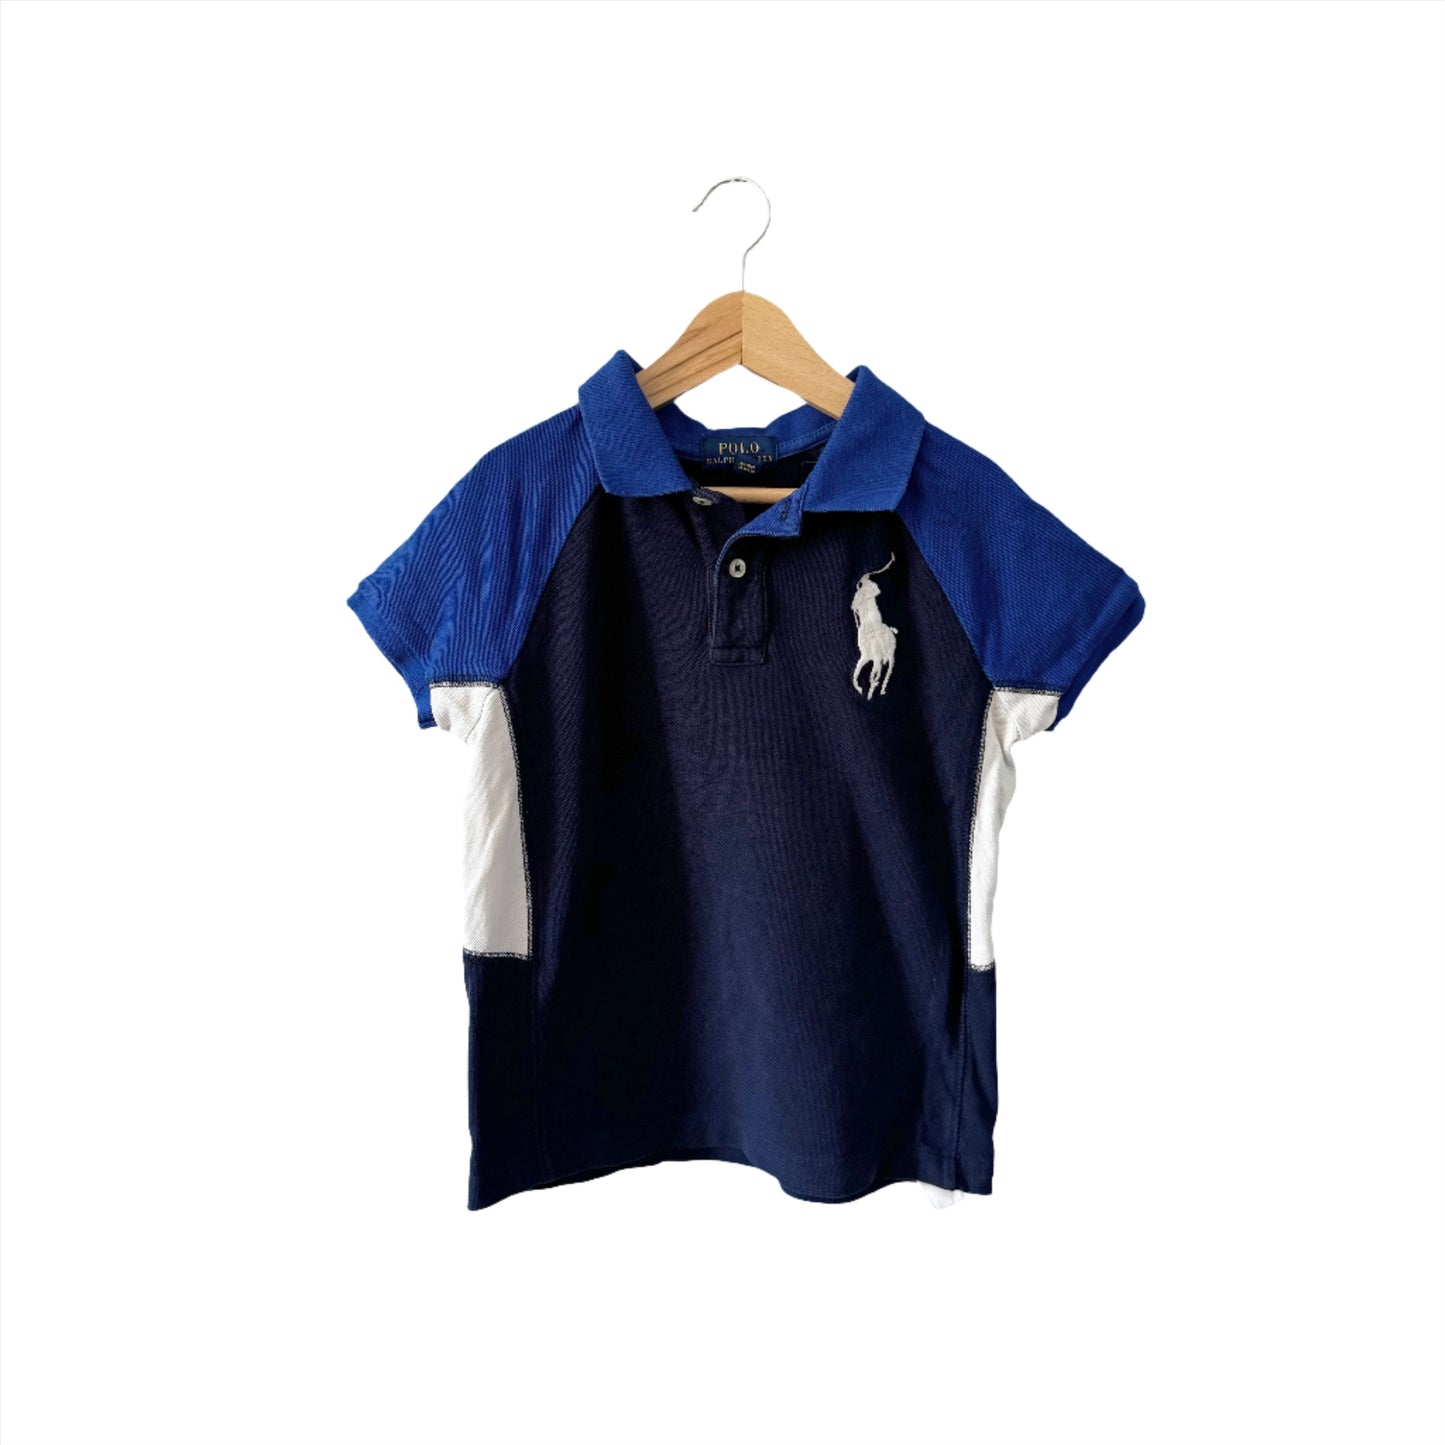 Polo Ralph Lauren / Navy, blue, white polo shirt / 5Y